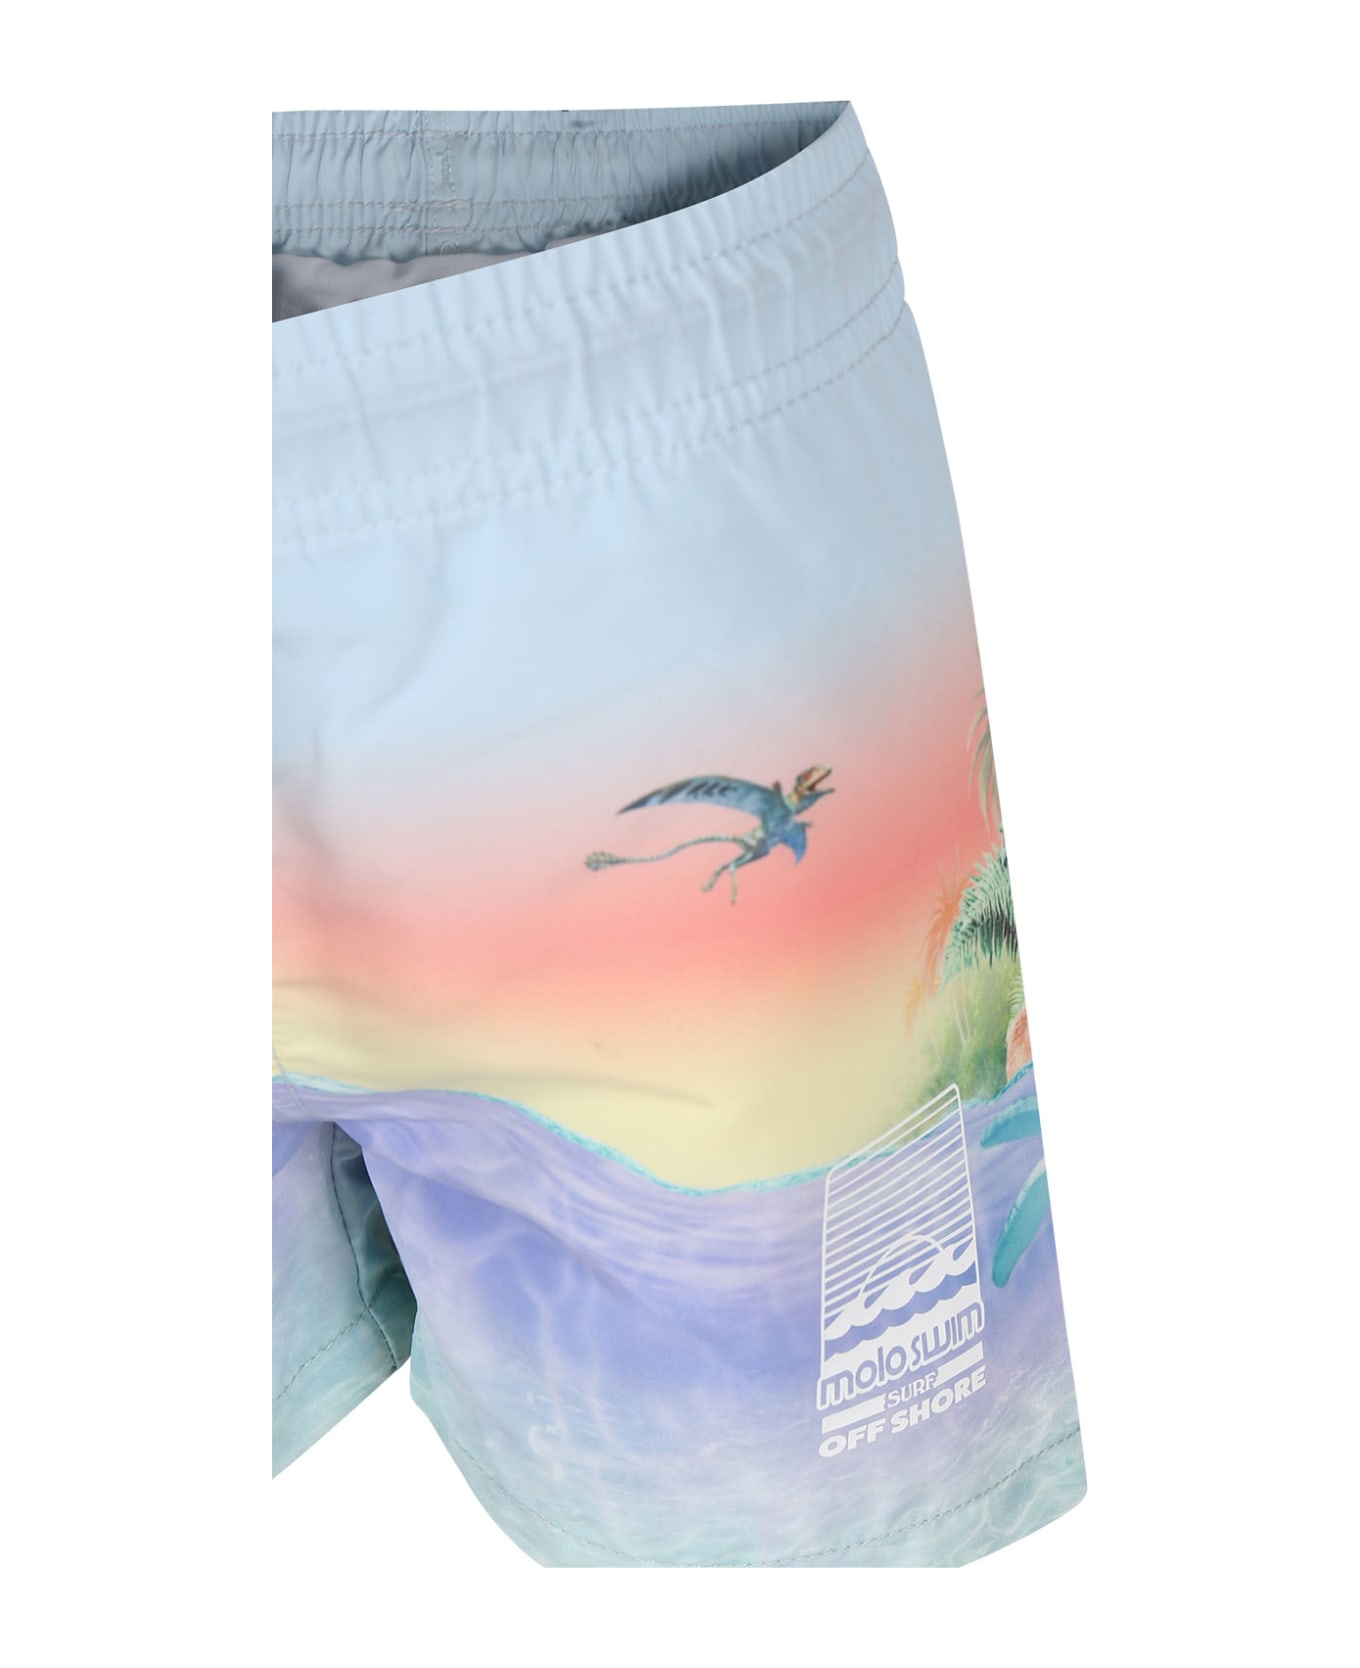 Molo Light Blue Swim Shorts For Boy With Dinosaur Print - Multicolor 水着